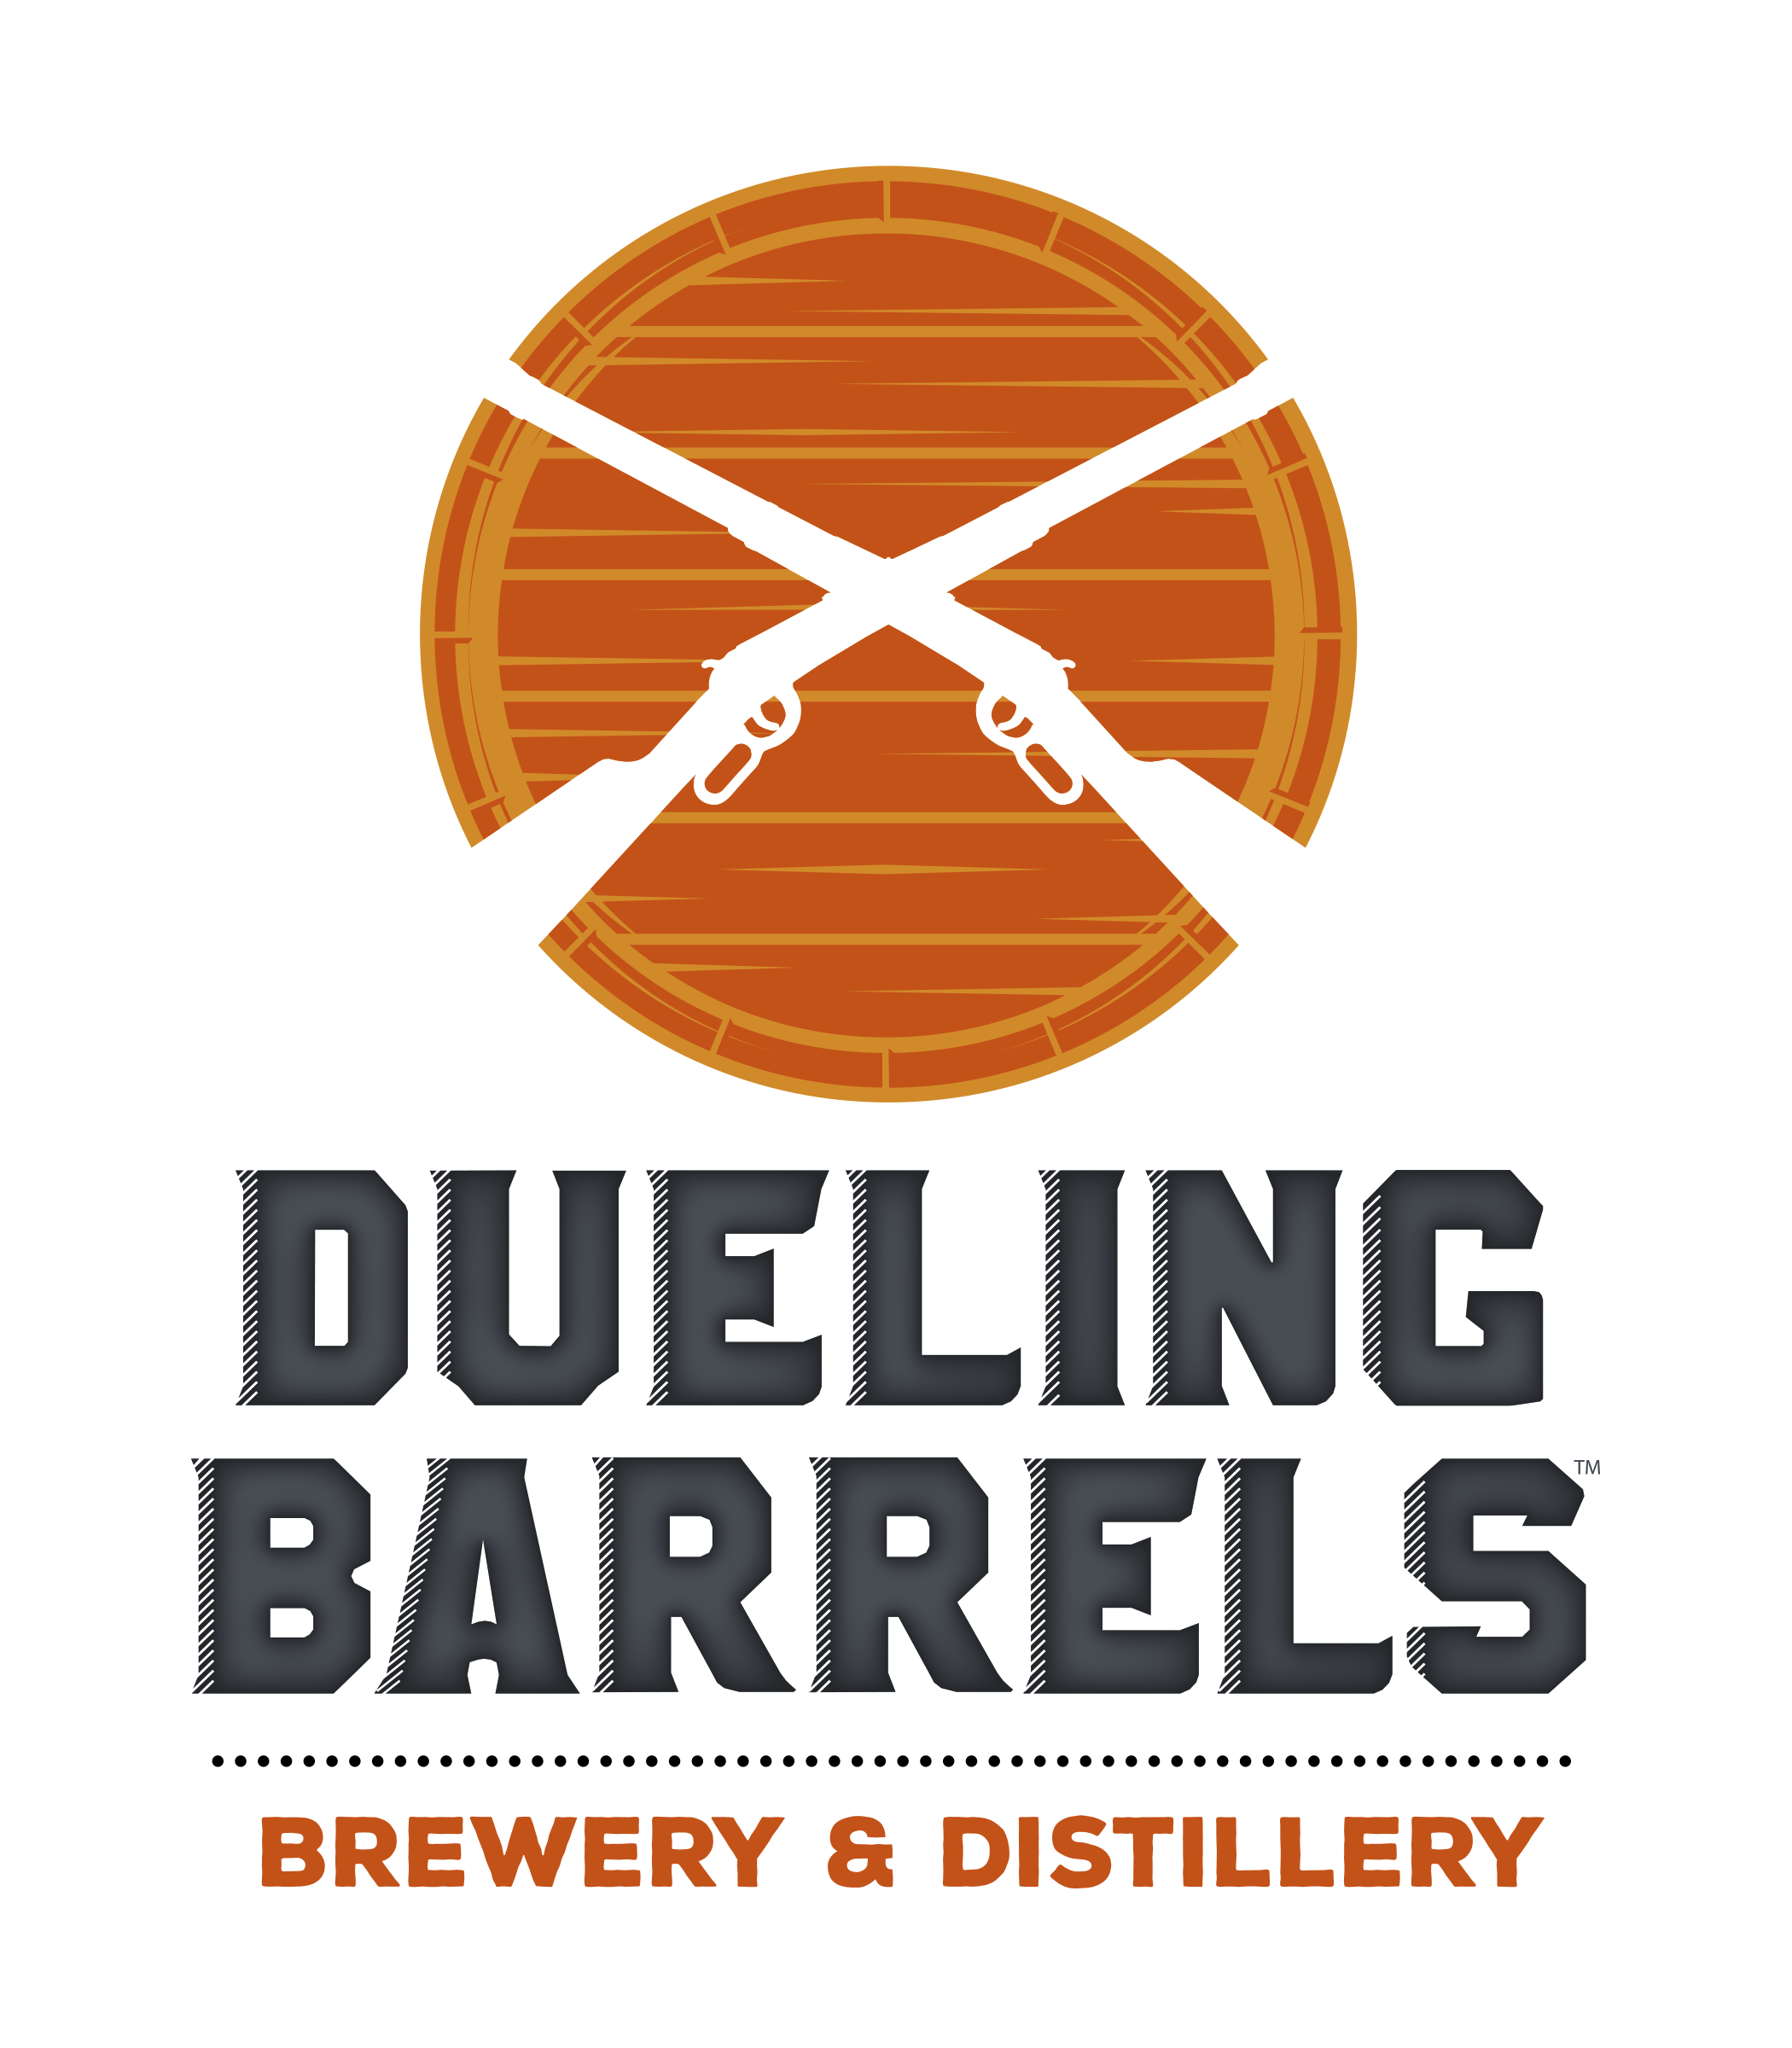 Dueling barrels logo